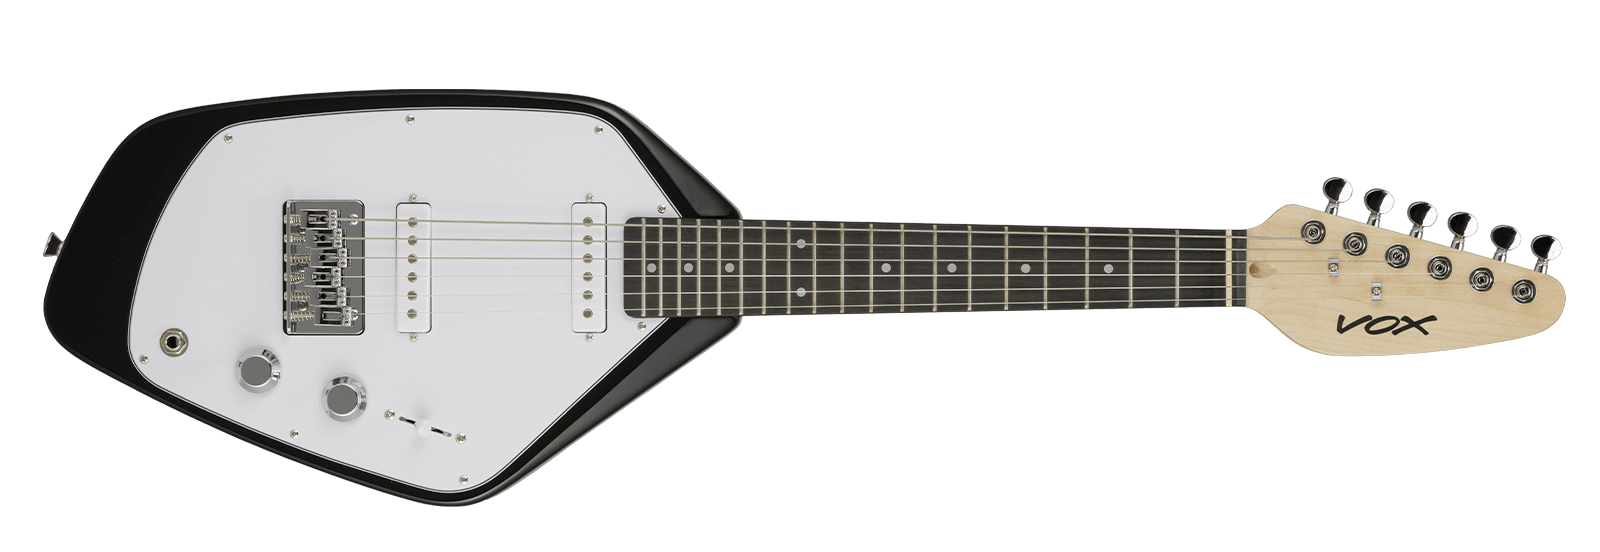 Vox Mark V Mini Guitar black horizontal.